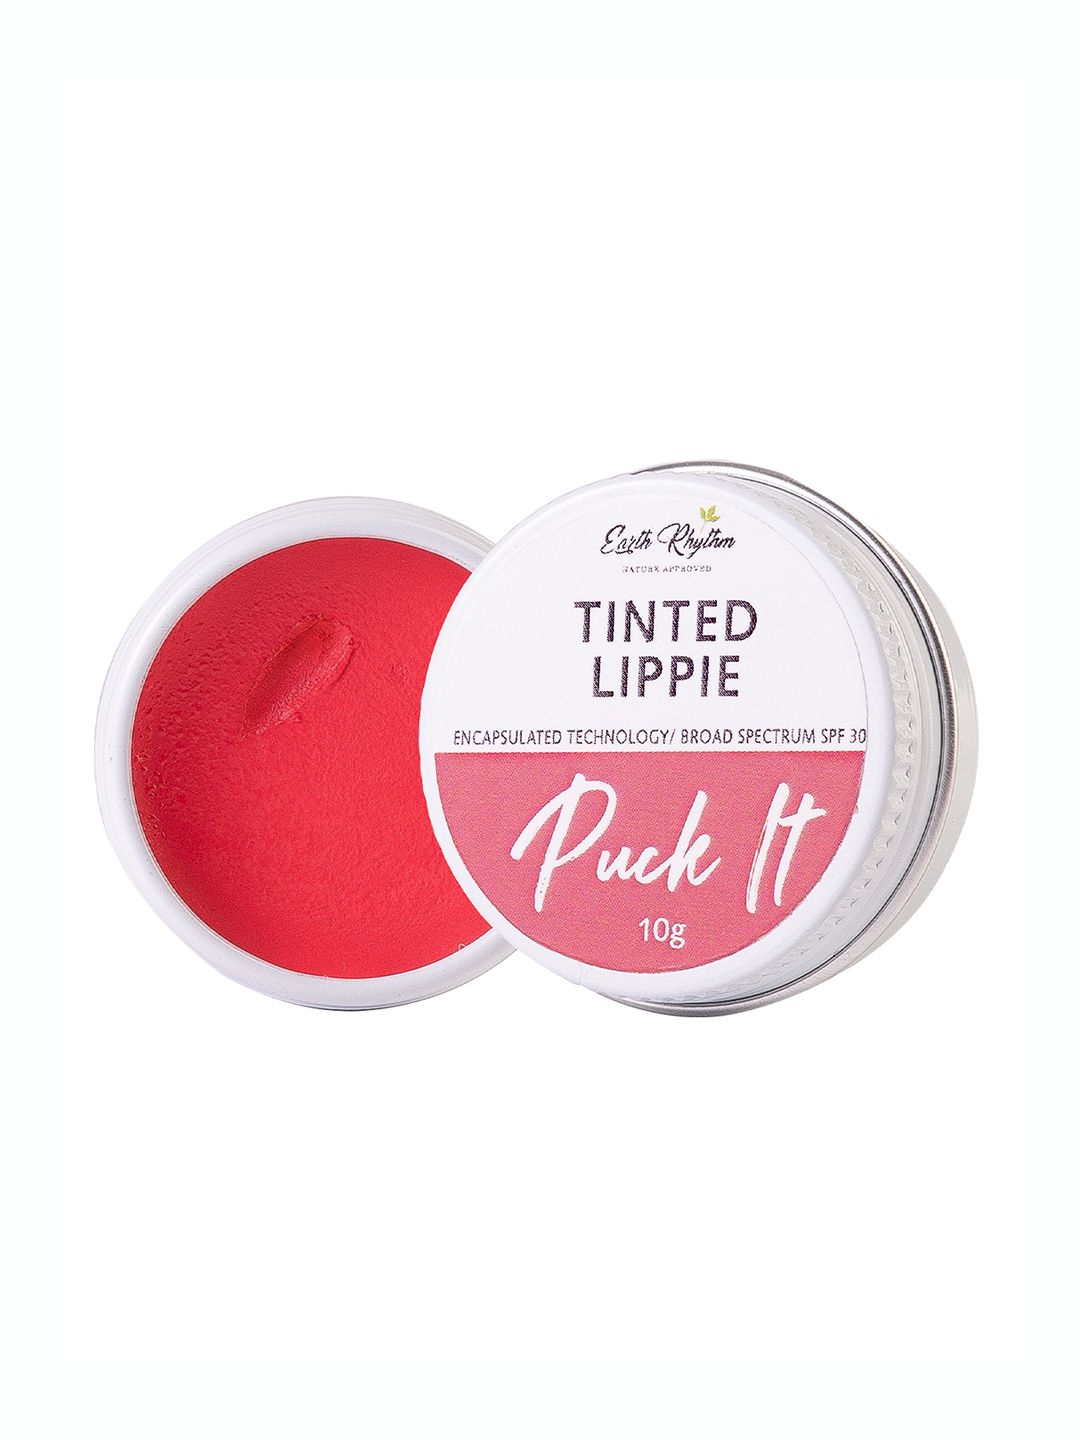 Earth Rhythm Tinted SPF 30 Lip Balm - Rose Bud Price in India